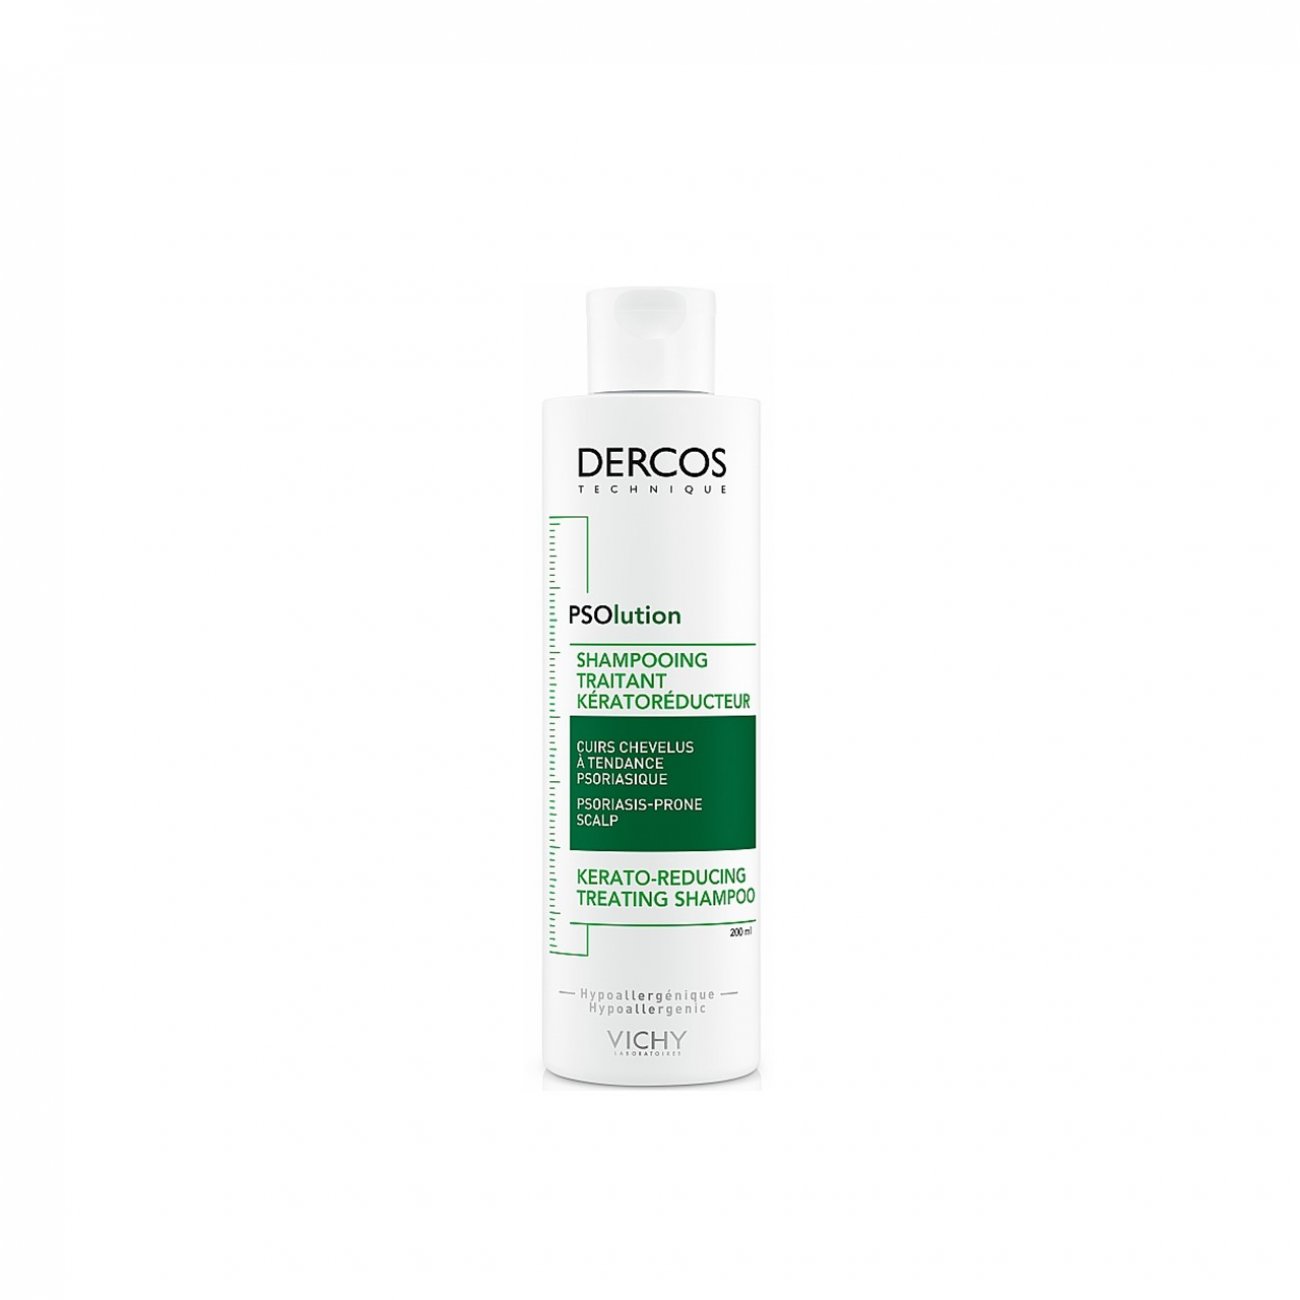 Buy Vichy Dercos PSOlution Kerato-Reducing Treating Shampoo oz) ·